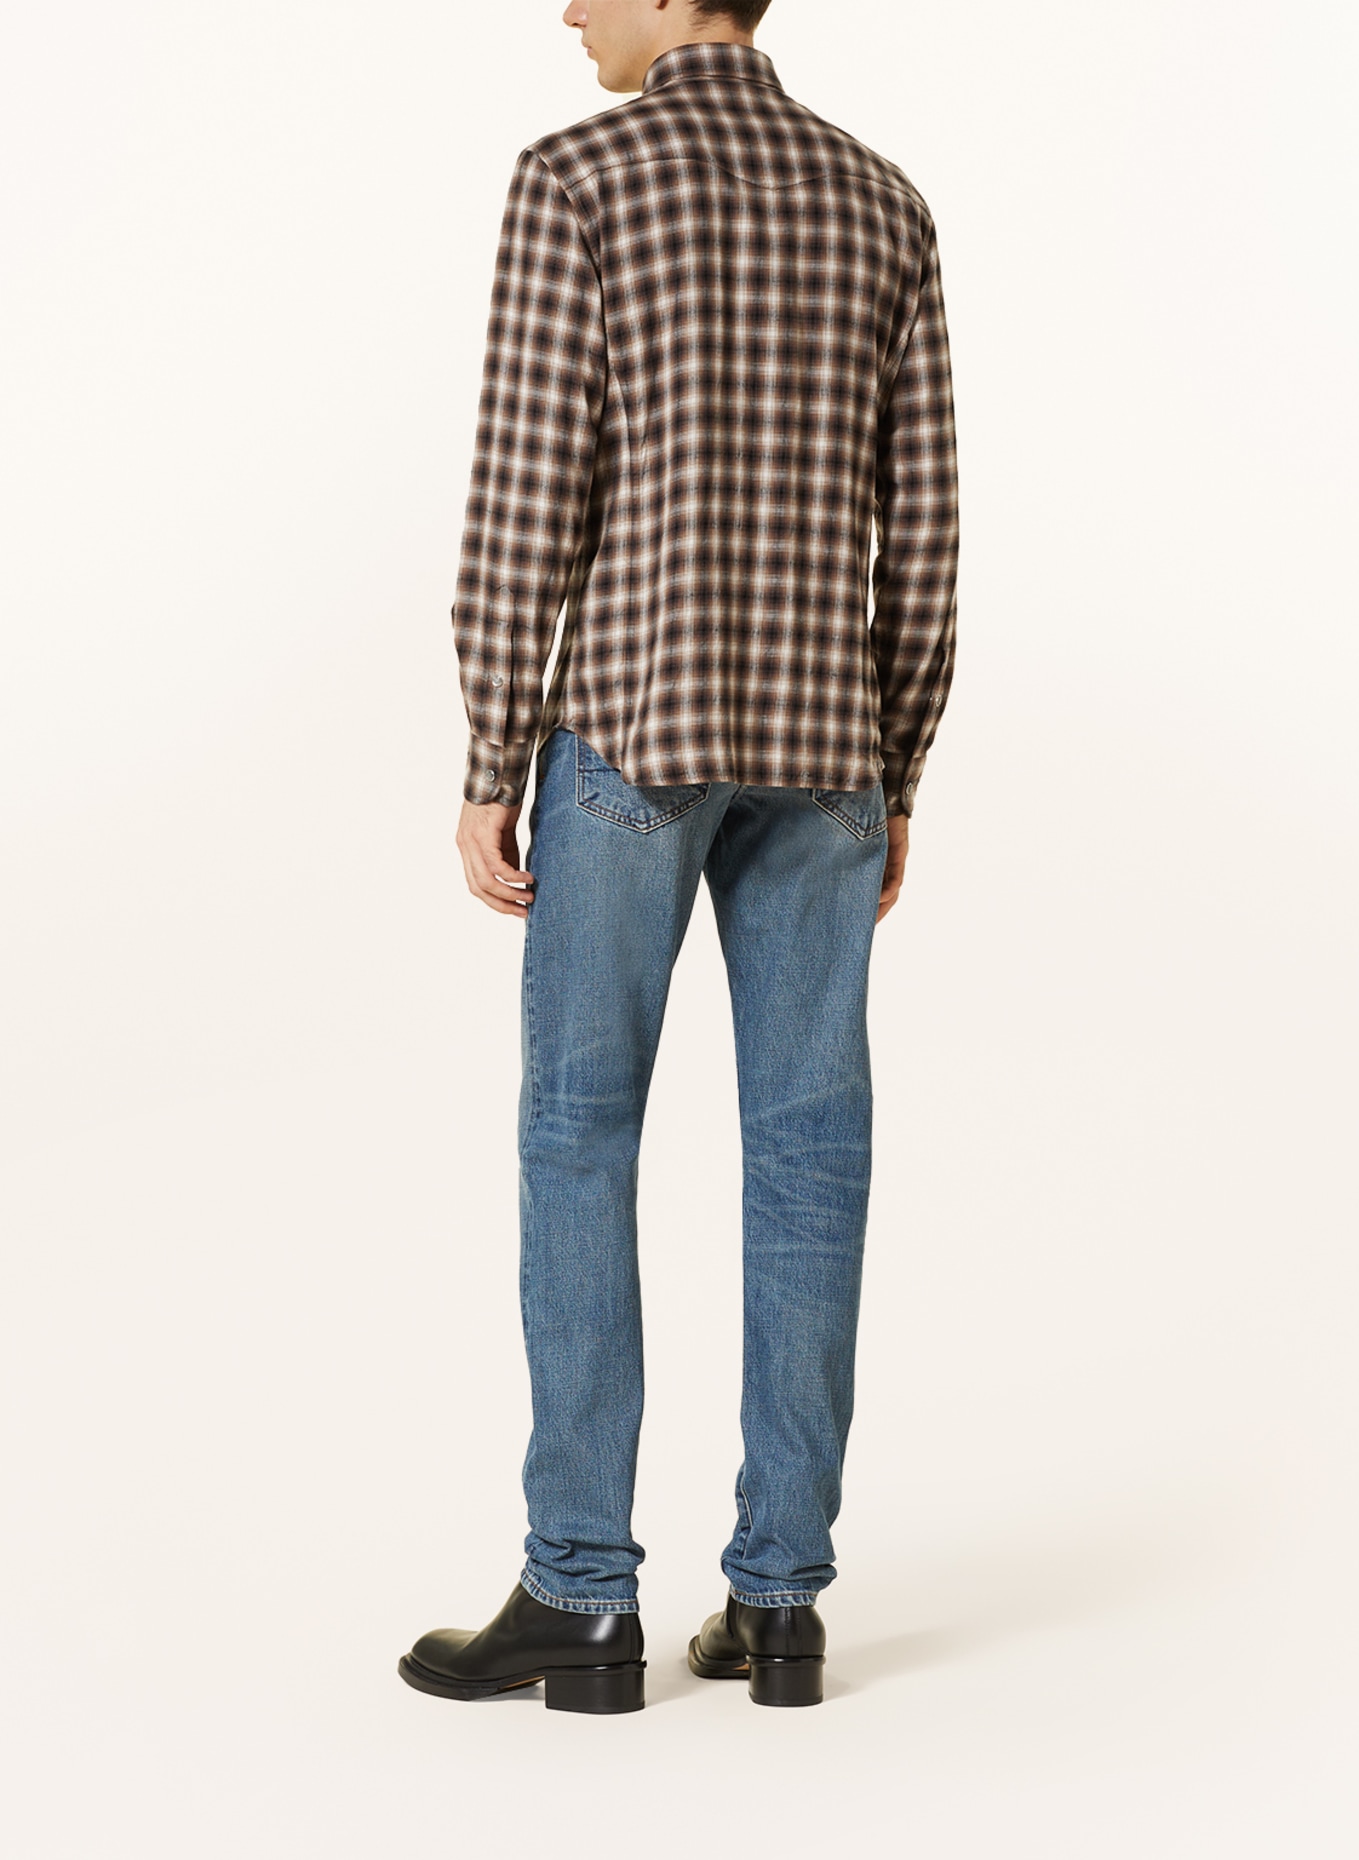 TOM FORD Flannel shirt regular fit, Color: BROWN/ LIGHT BROWN/ DARK GRAY (Image 3)